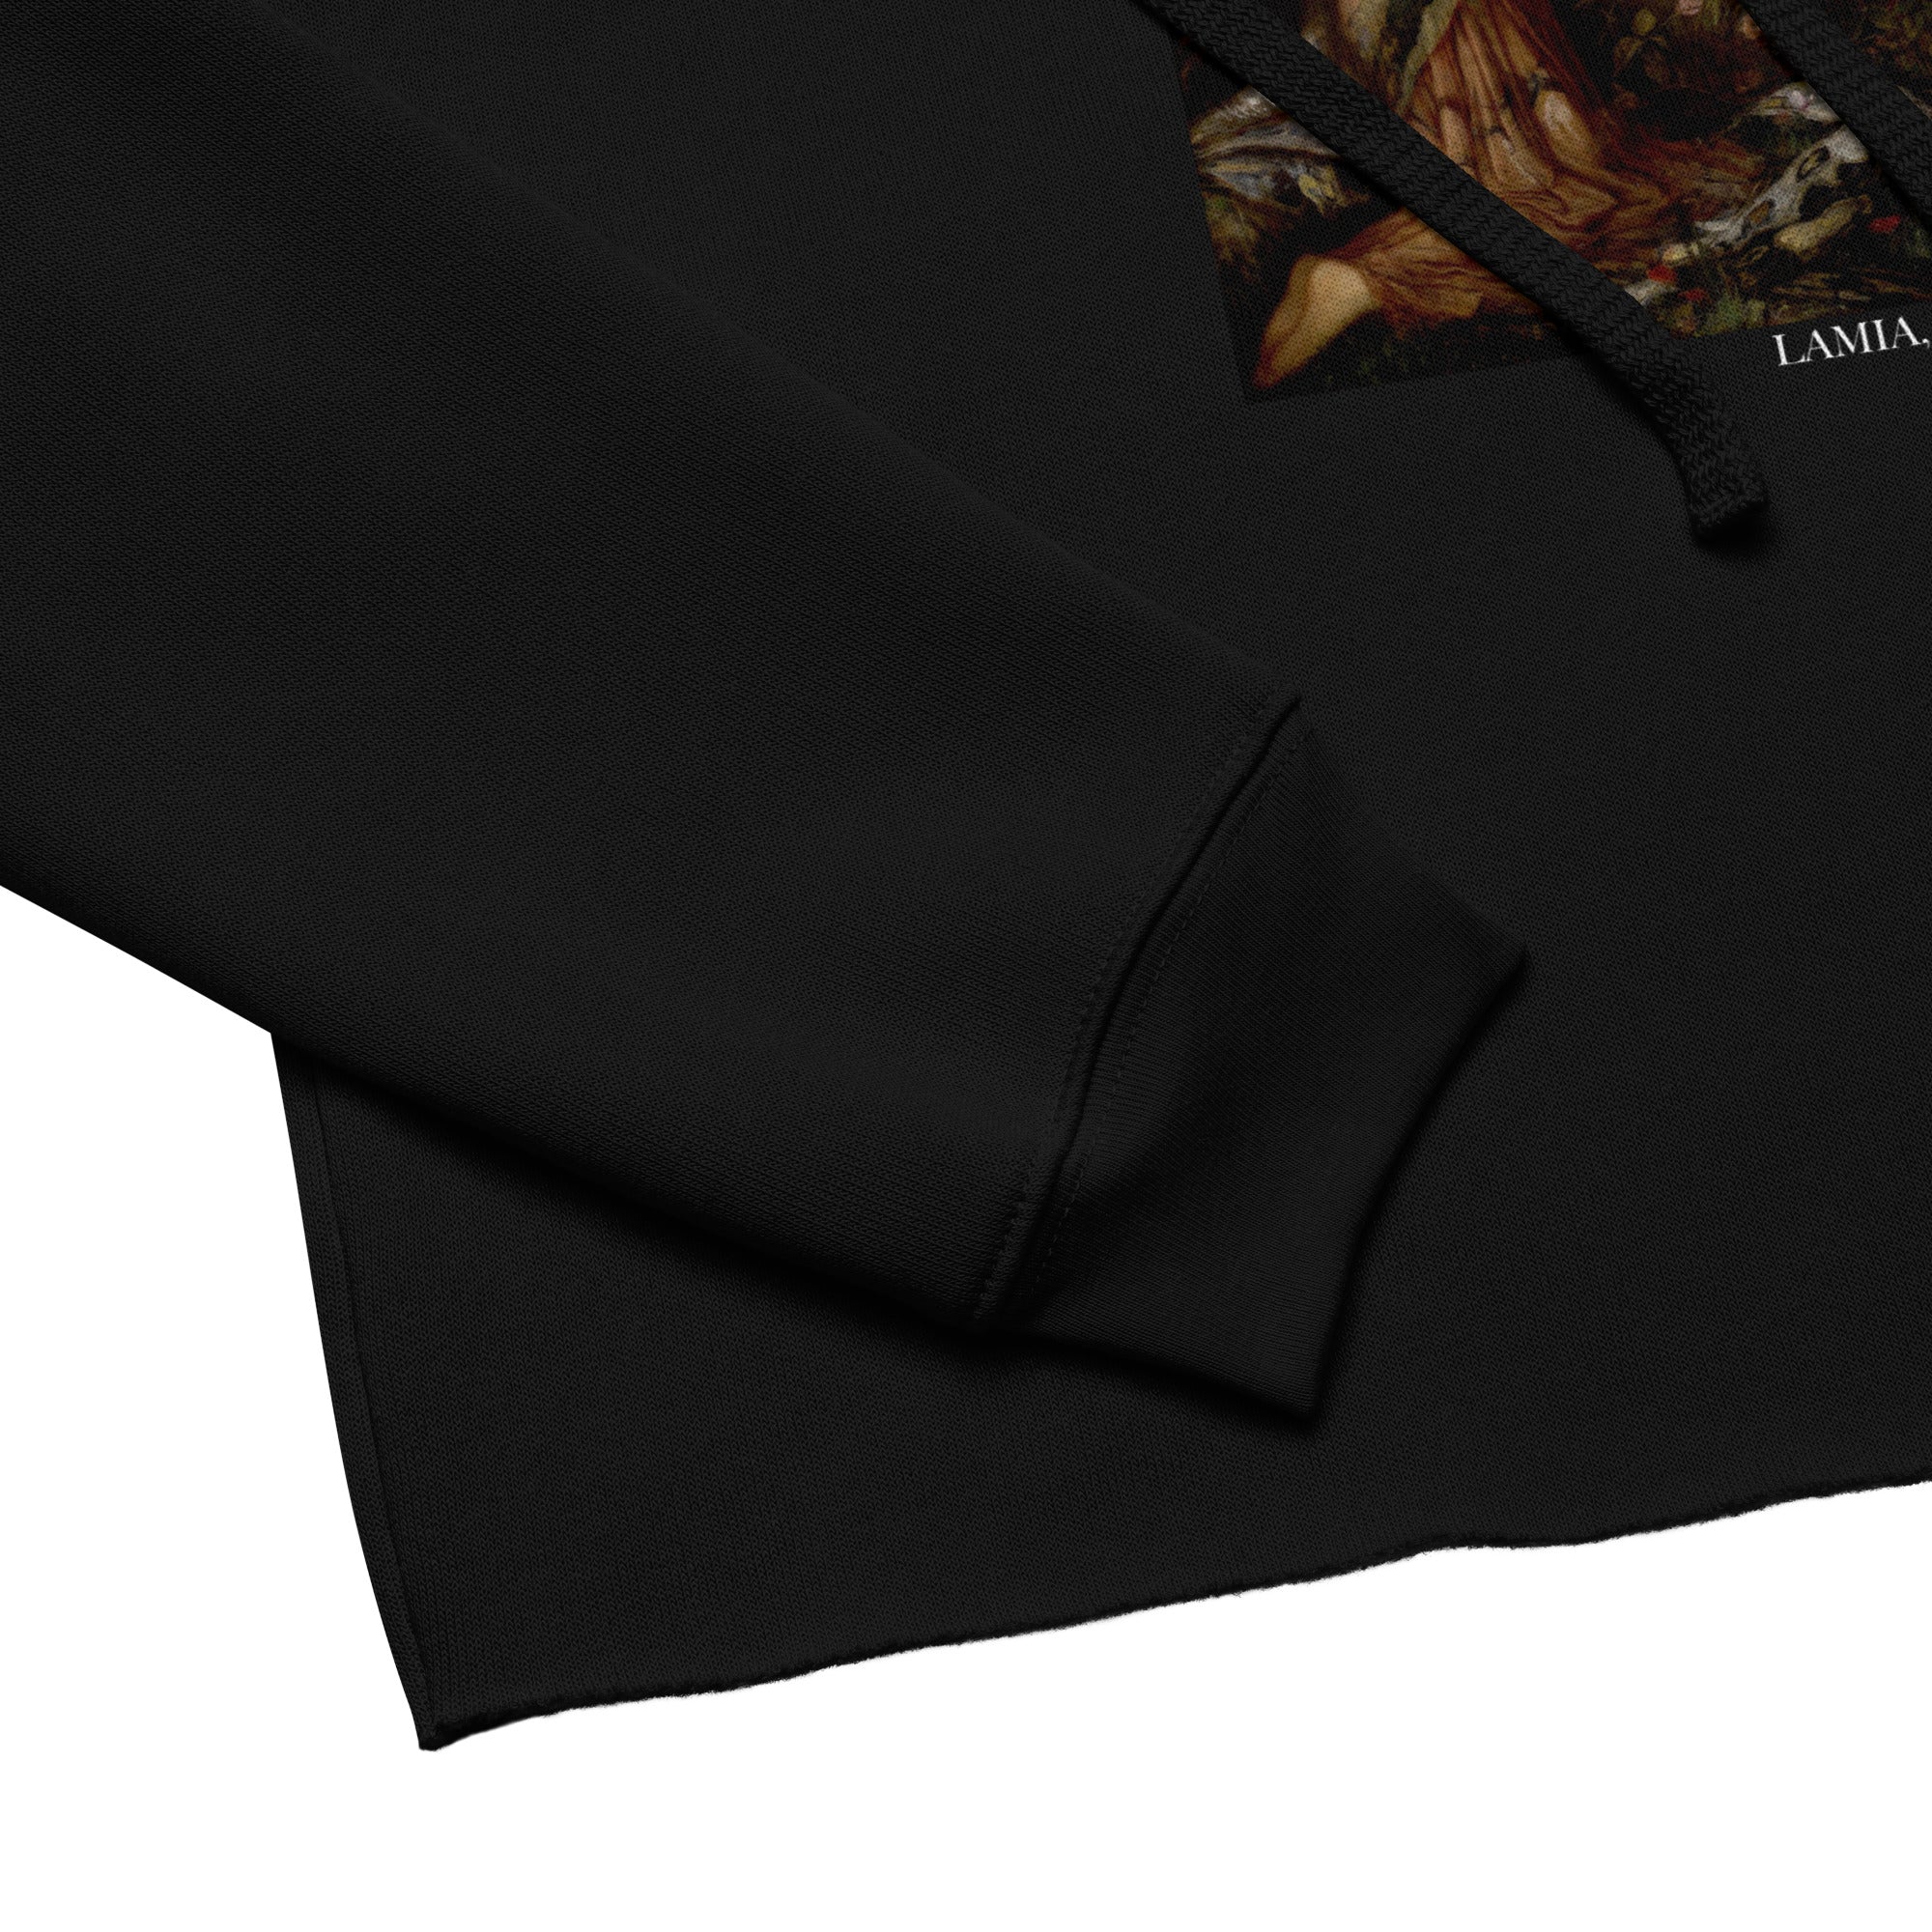 John William Waterhouse 'Lamia' Famous Painting Cropped Hoodie | Premium Art Cropped Hoodie